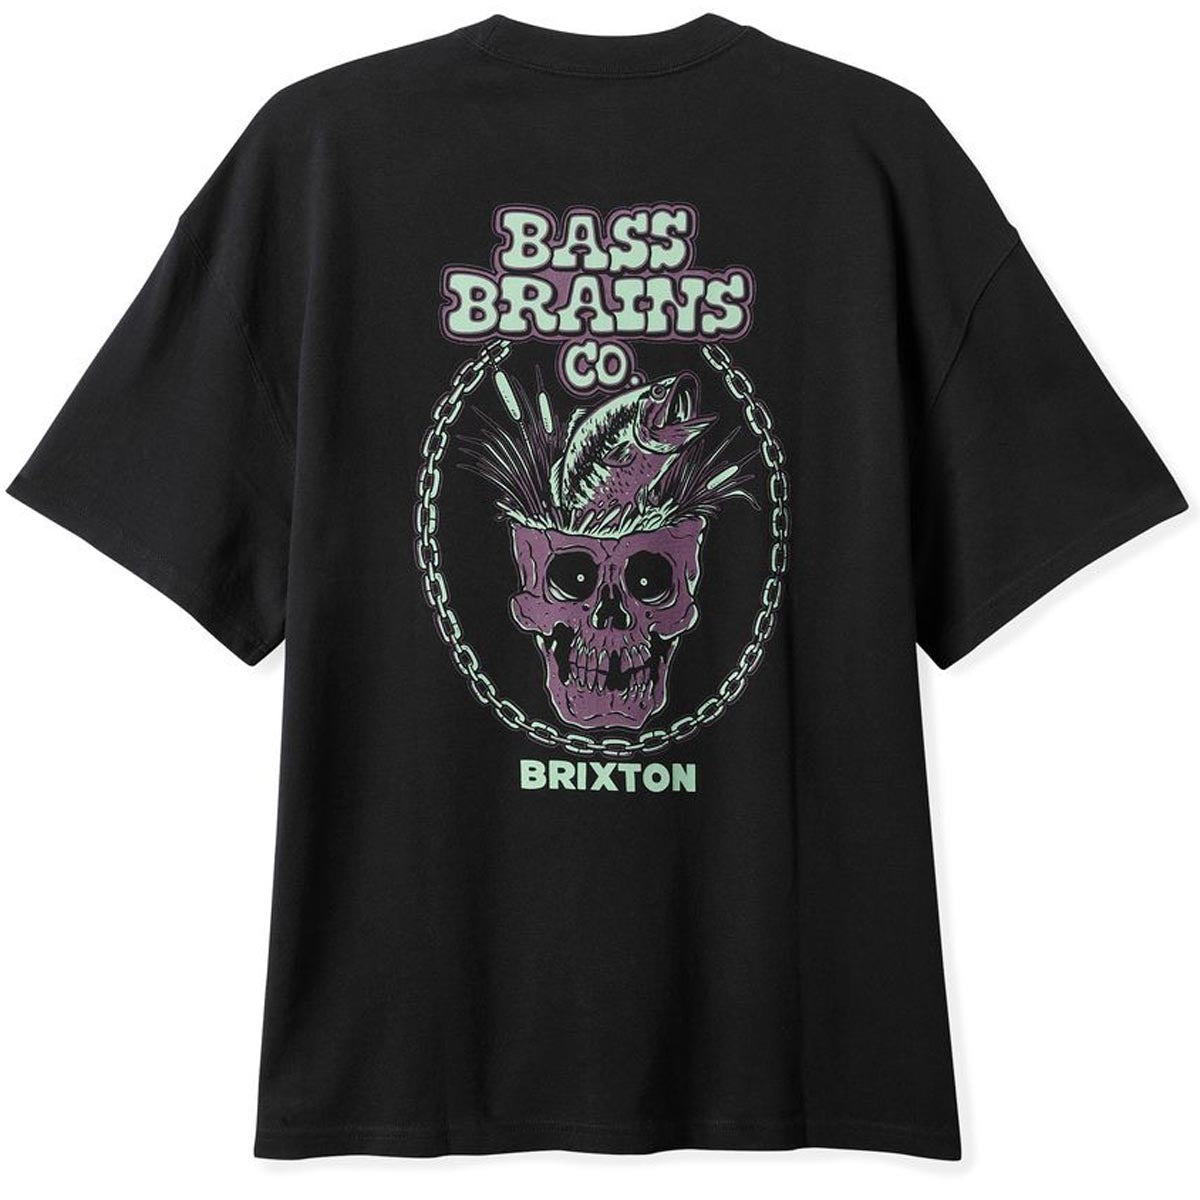 Brixton Bass Brains Skull T-Shirt - Black image 1